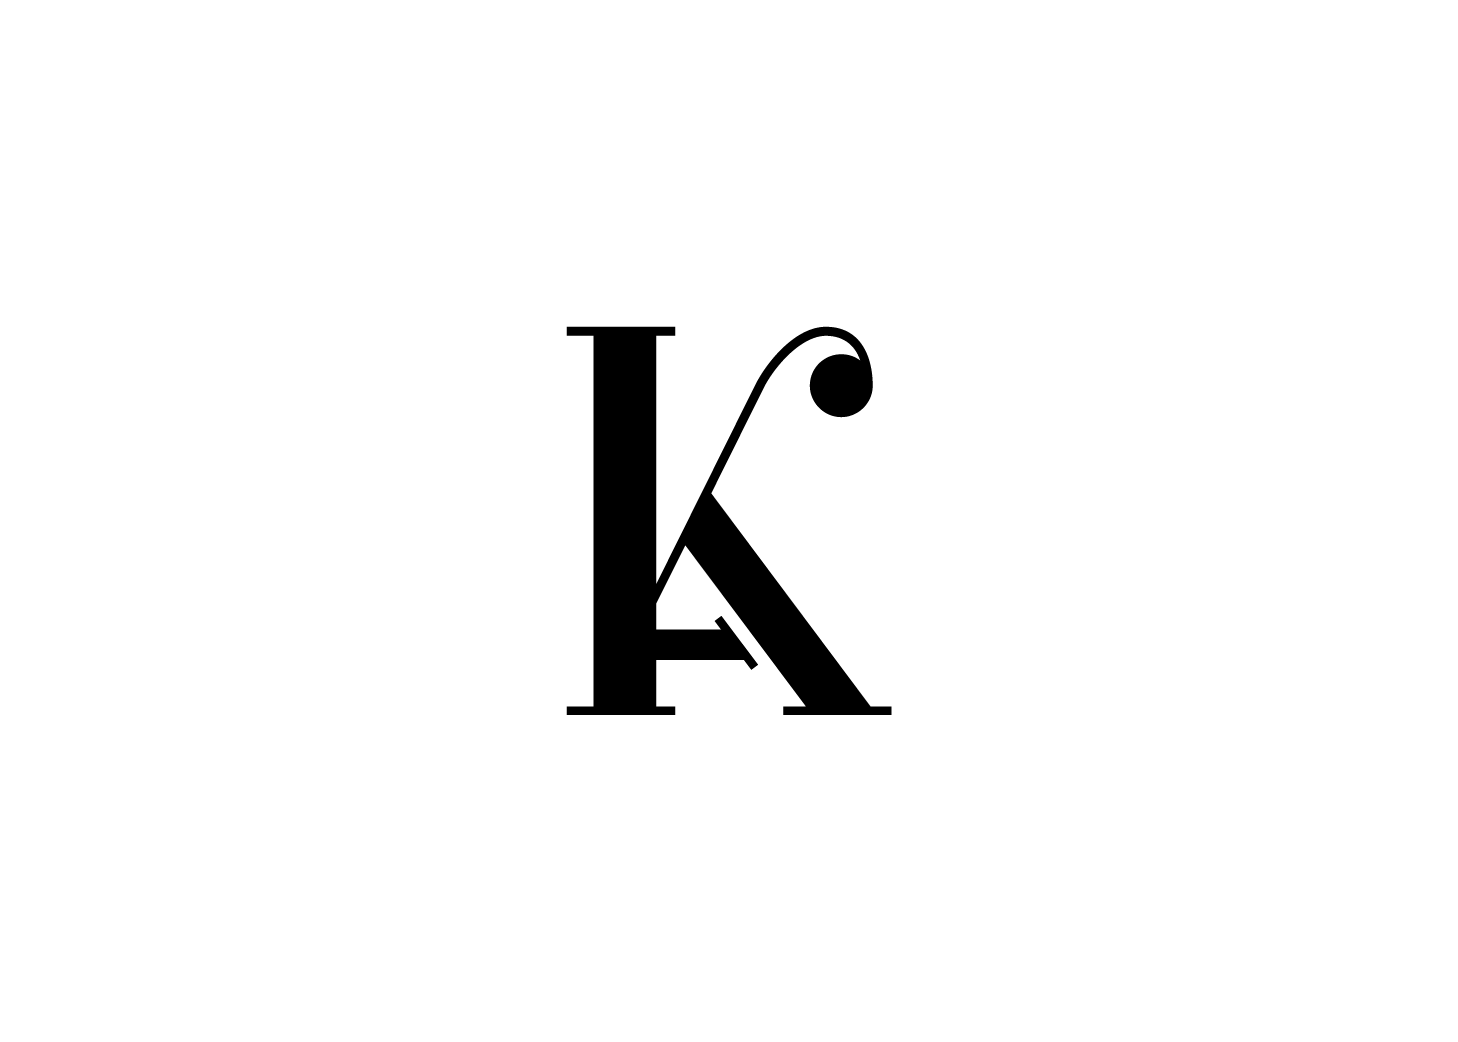 Ka Logo - Elegant, Traditional Logo Design for KLA or KA (intials) by Strokes ...